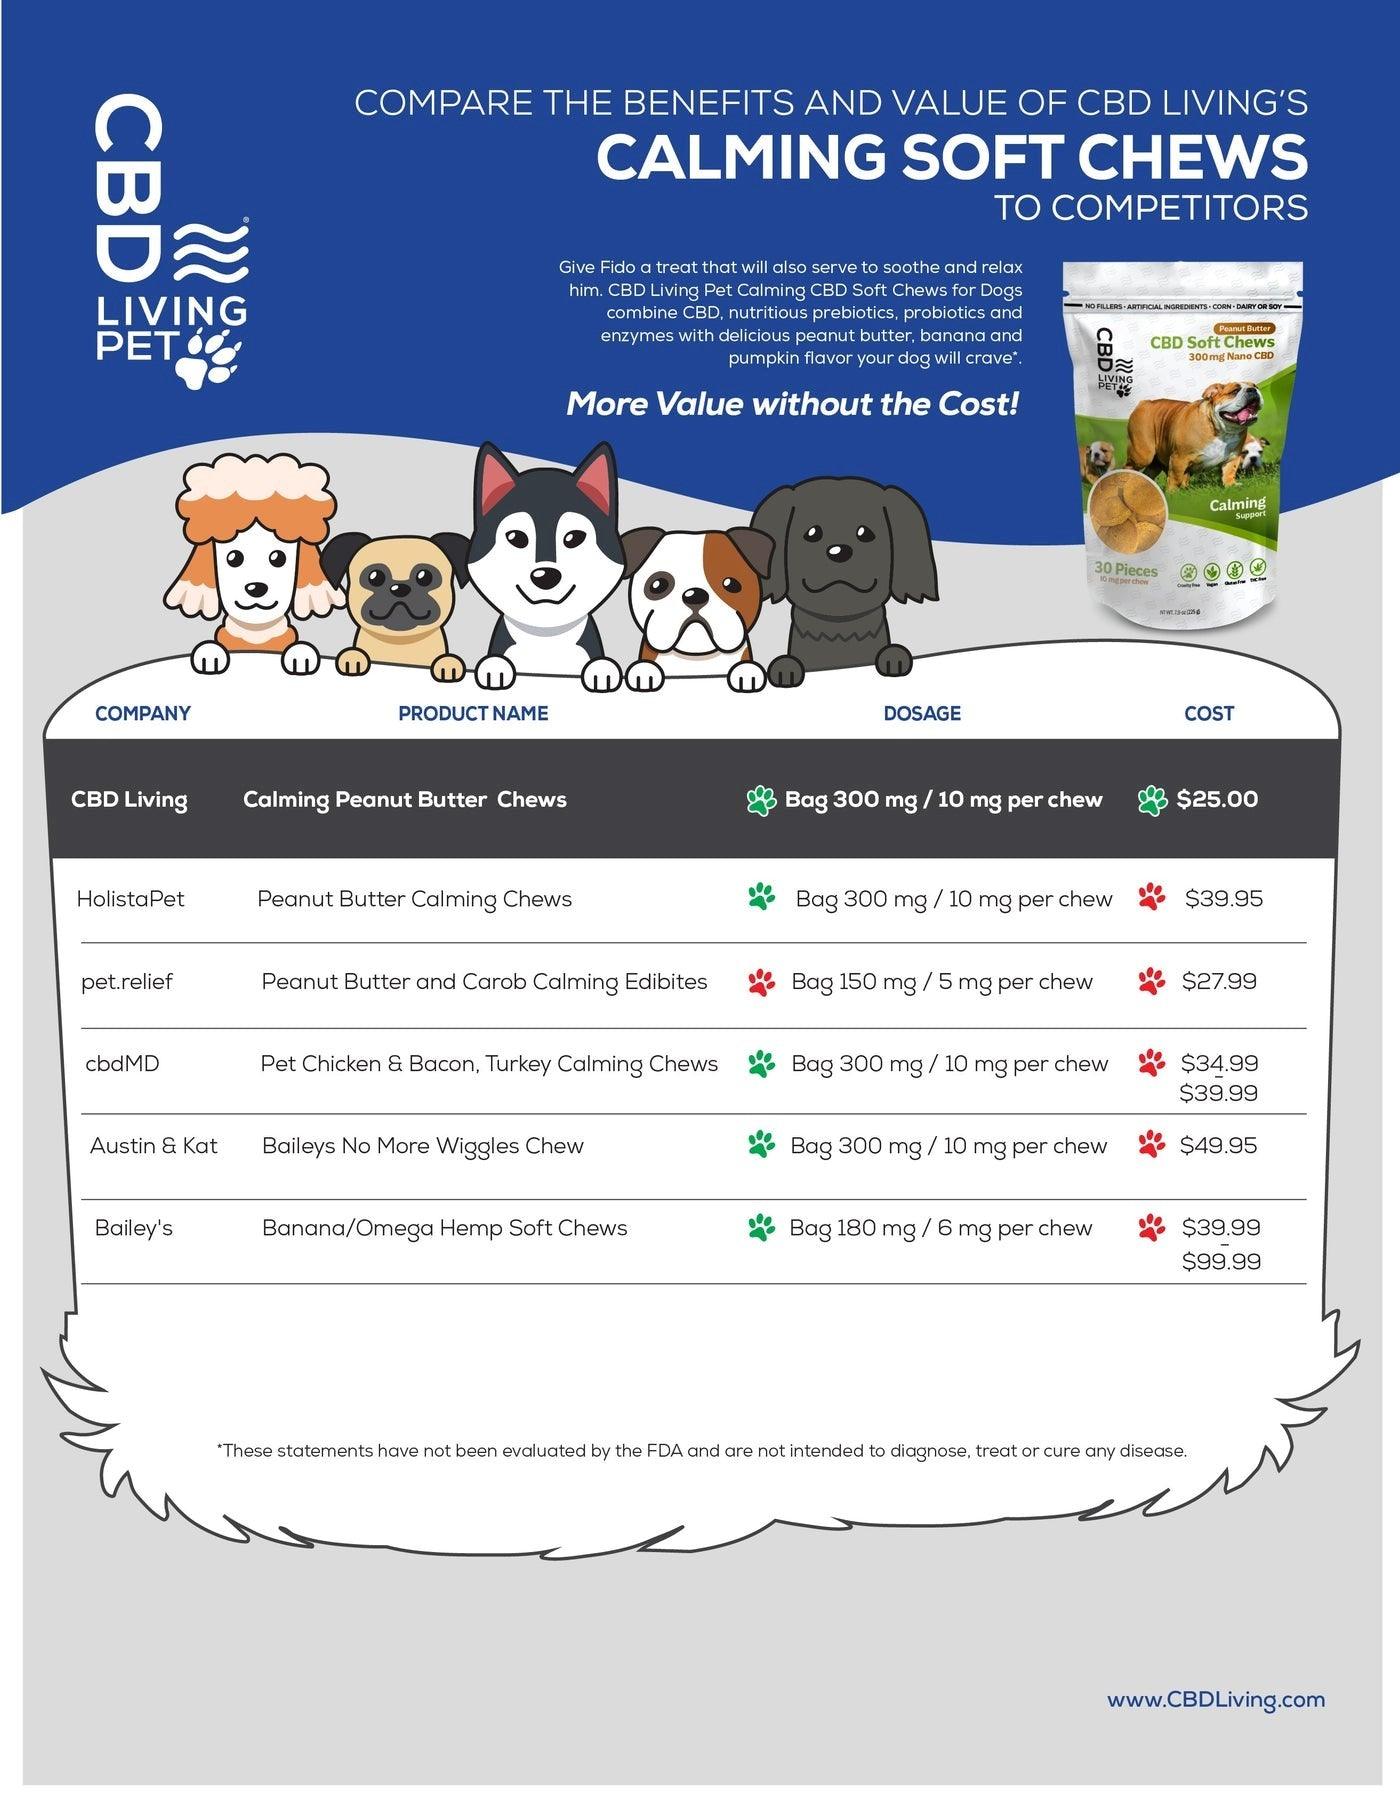 CBD Living Pet Calming Chews comparison to competitors